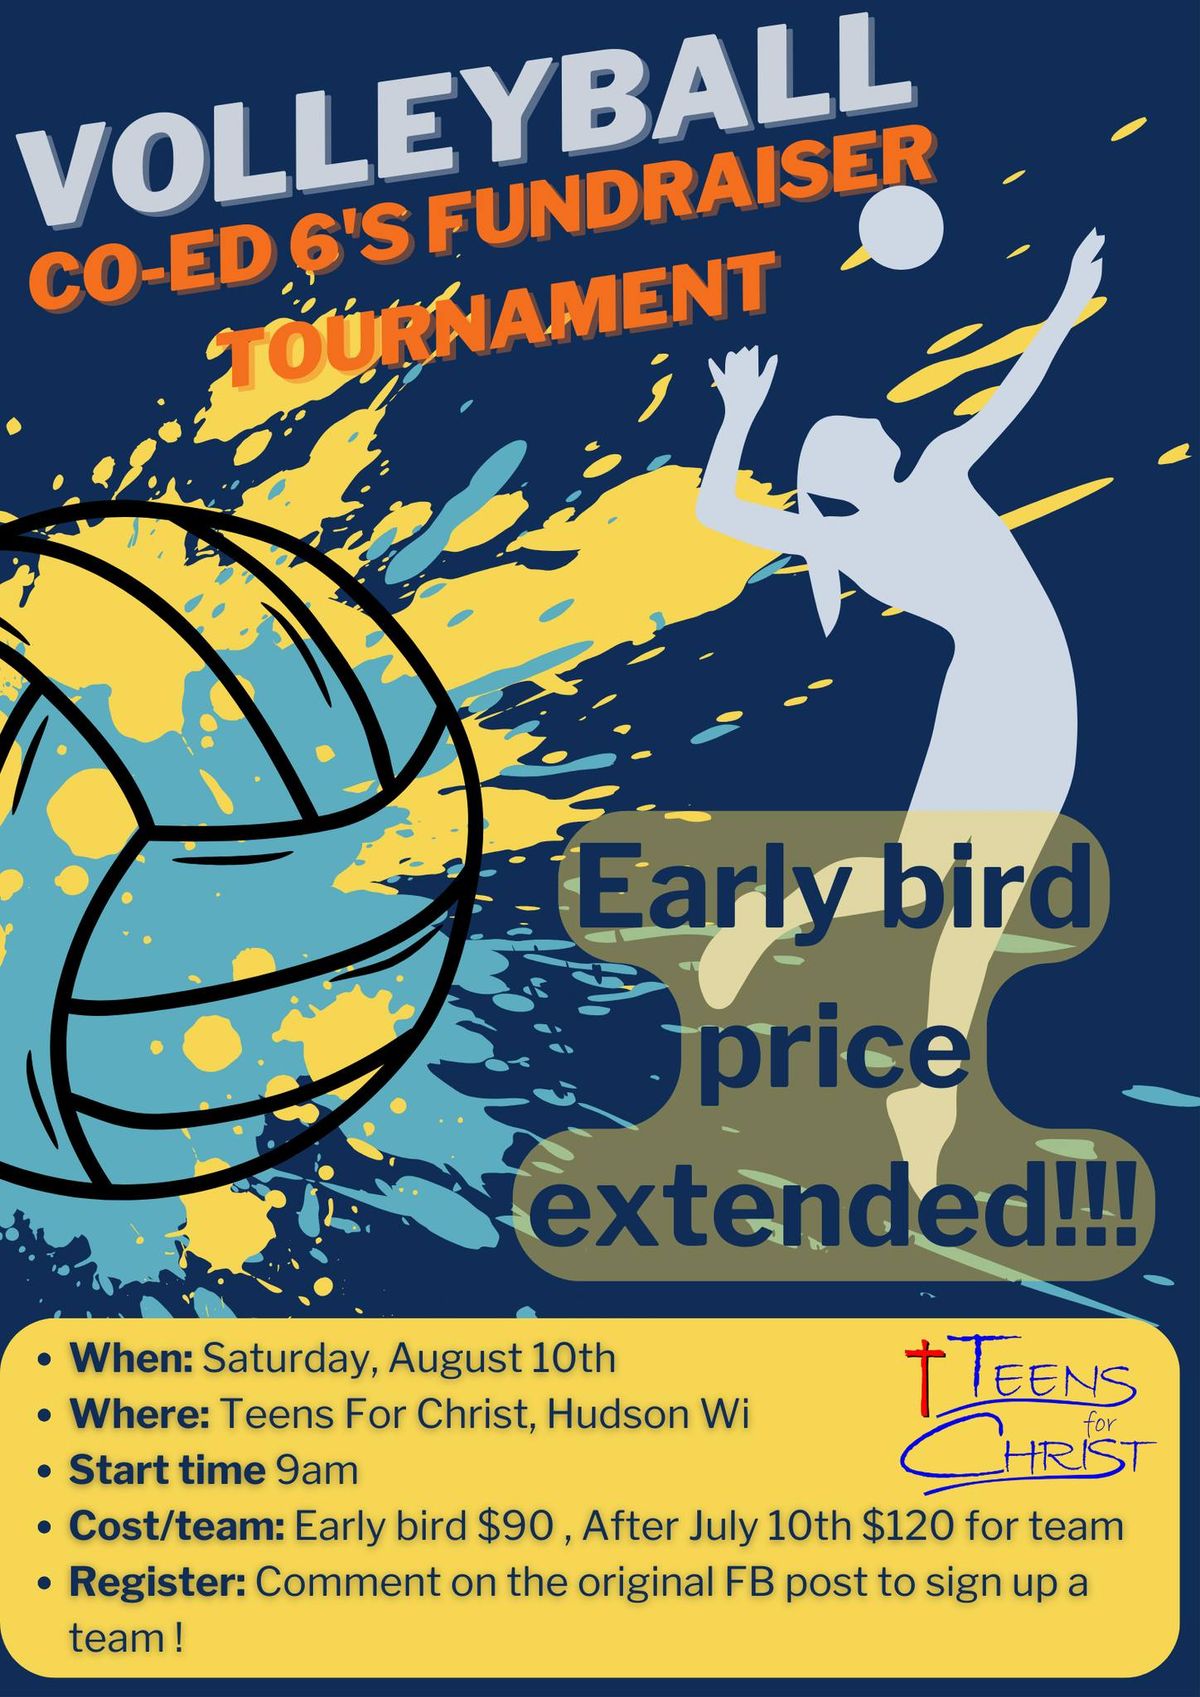 Volleyball Tournament Fundraiser